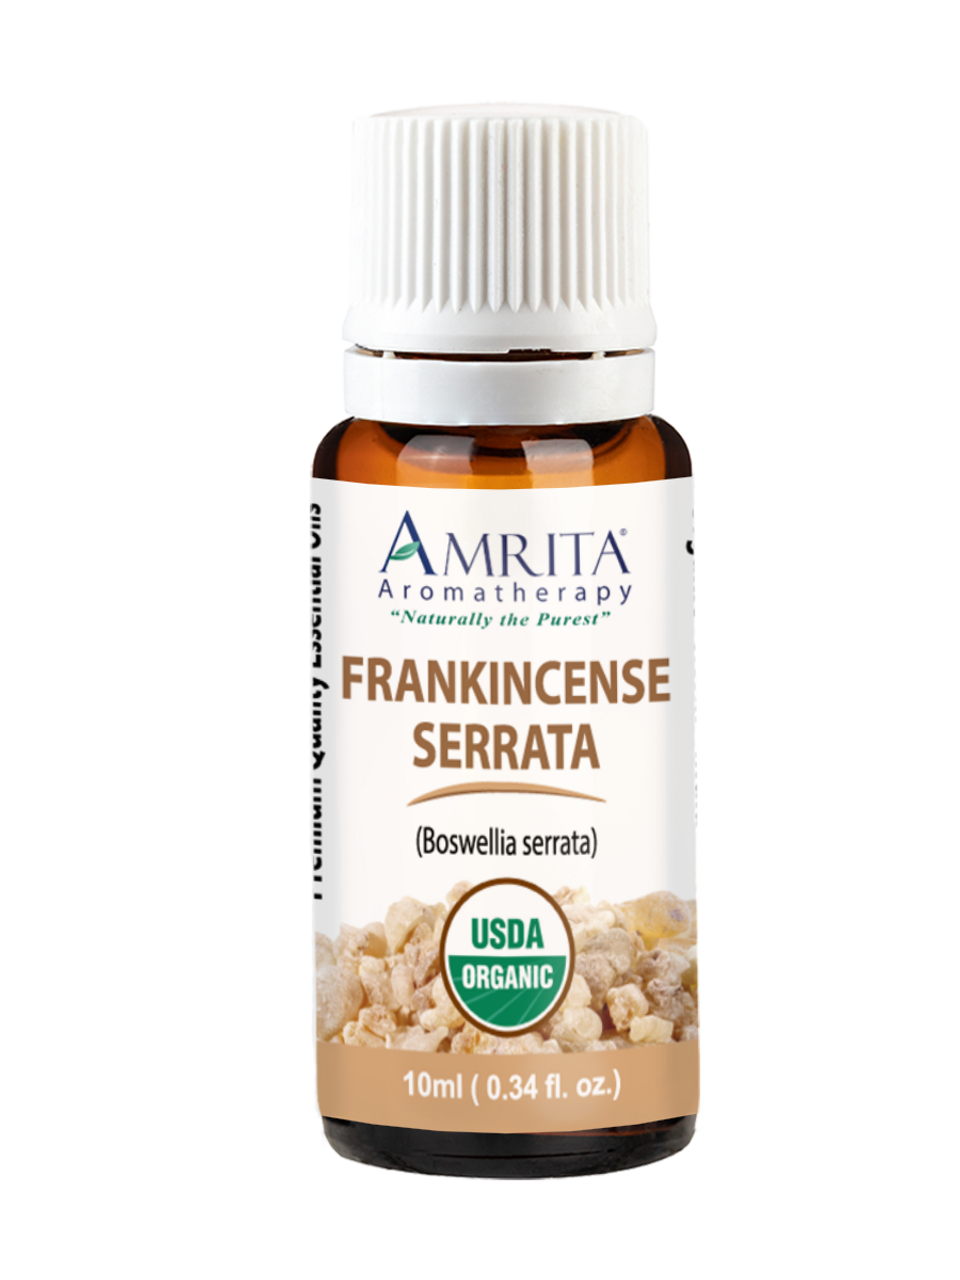 USDA Organic, Natural, Pure - Frankincense Essential Oils